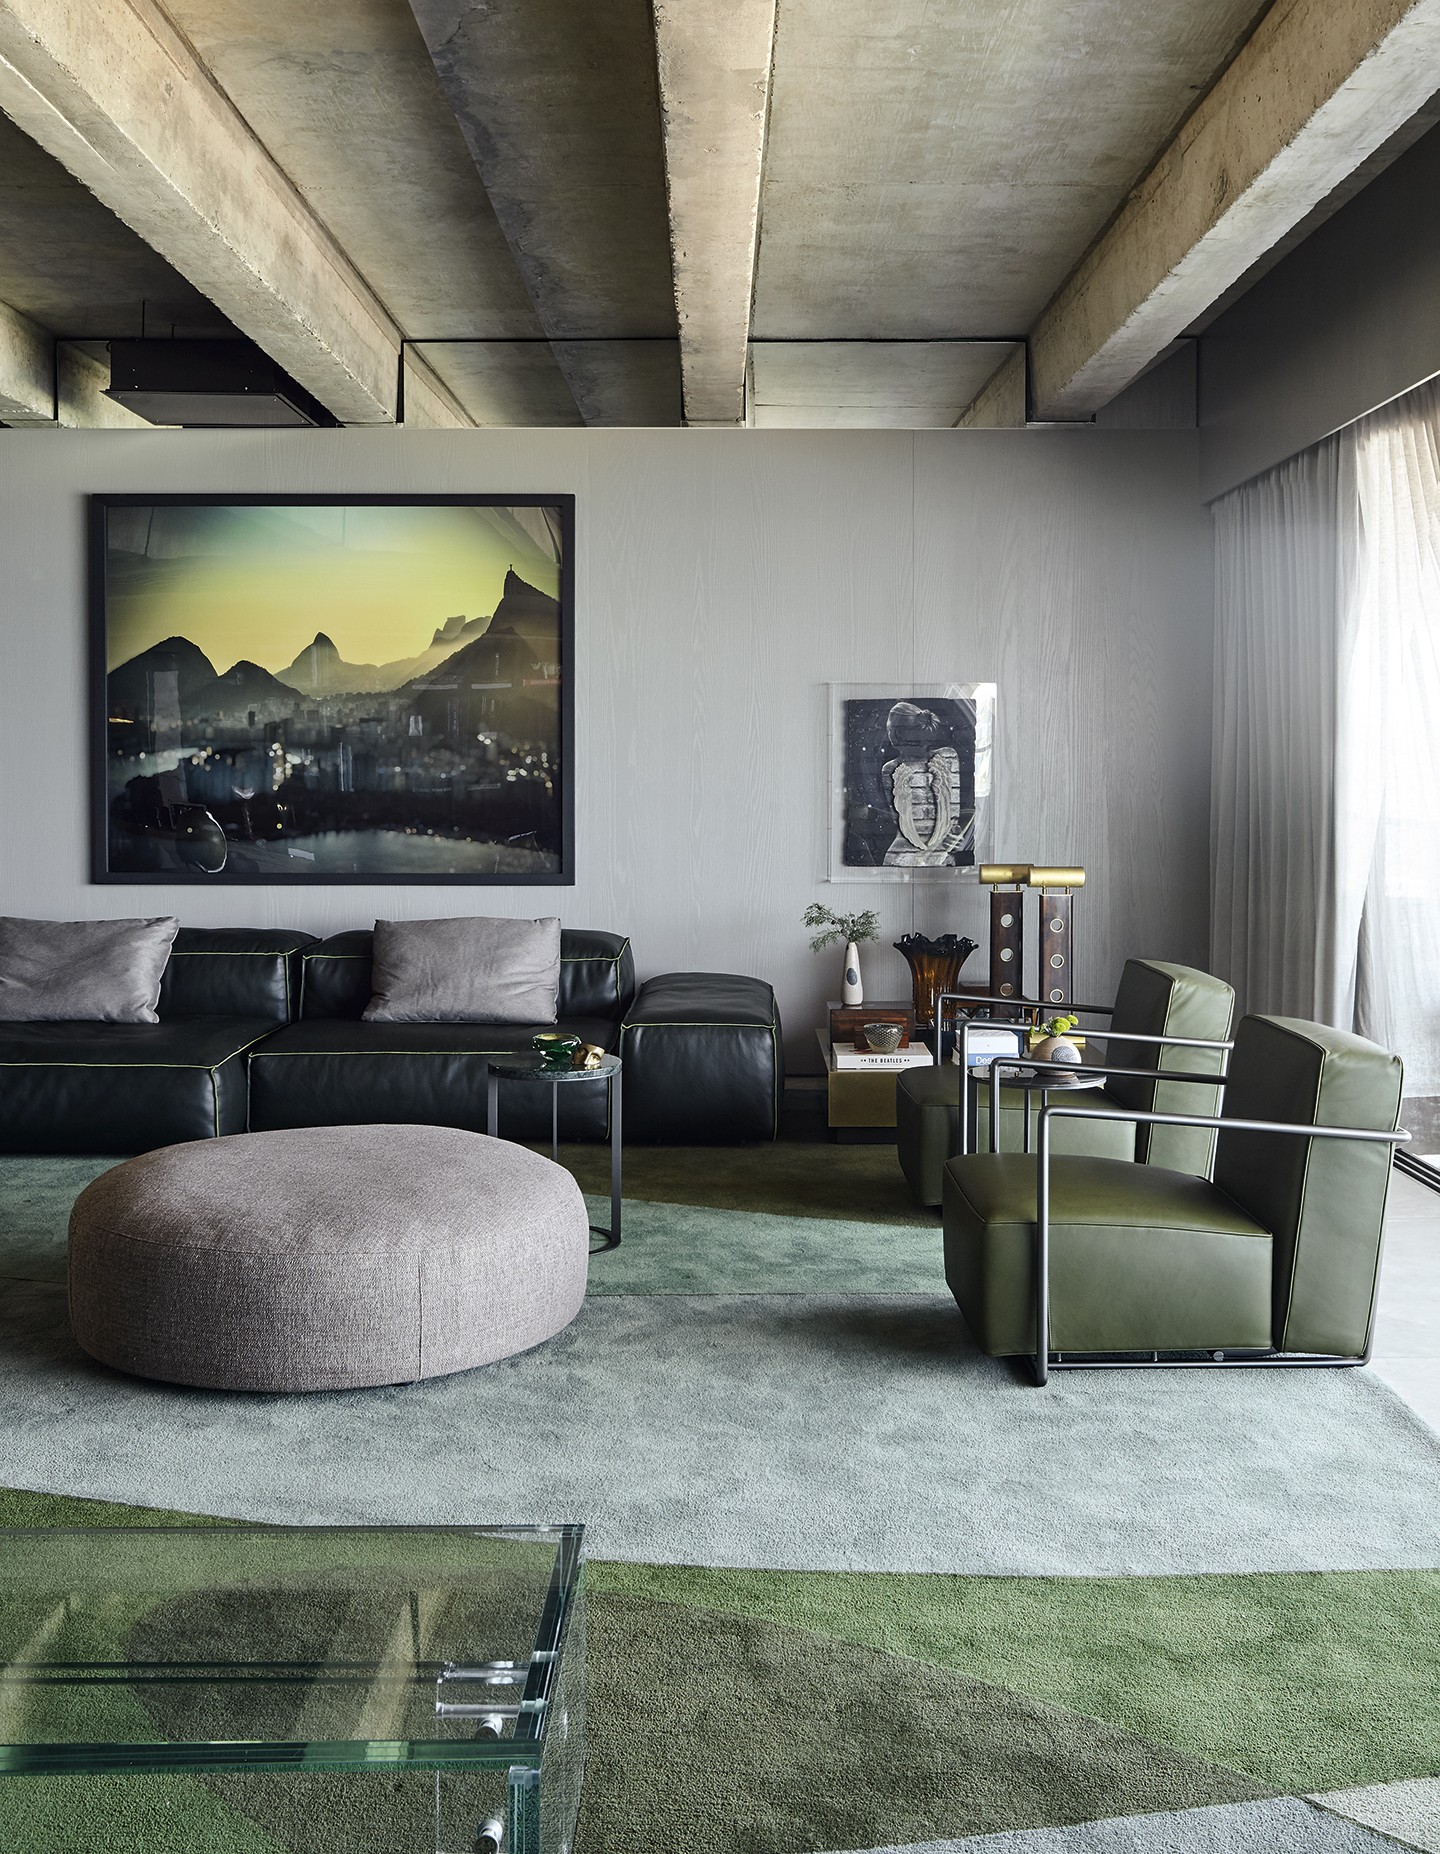 Colorido elegante se destaca neste apartamento projetado por David Bastos (Foto: Ilana Bessler)